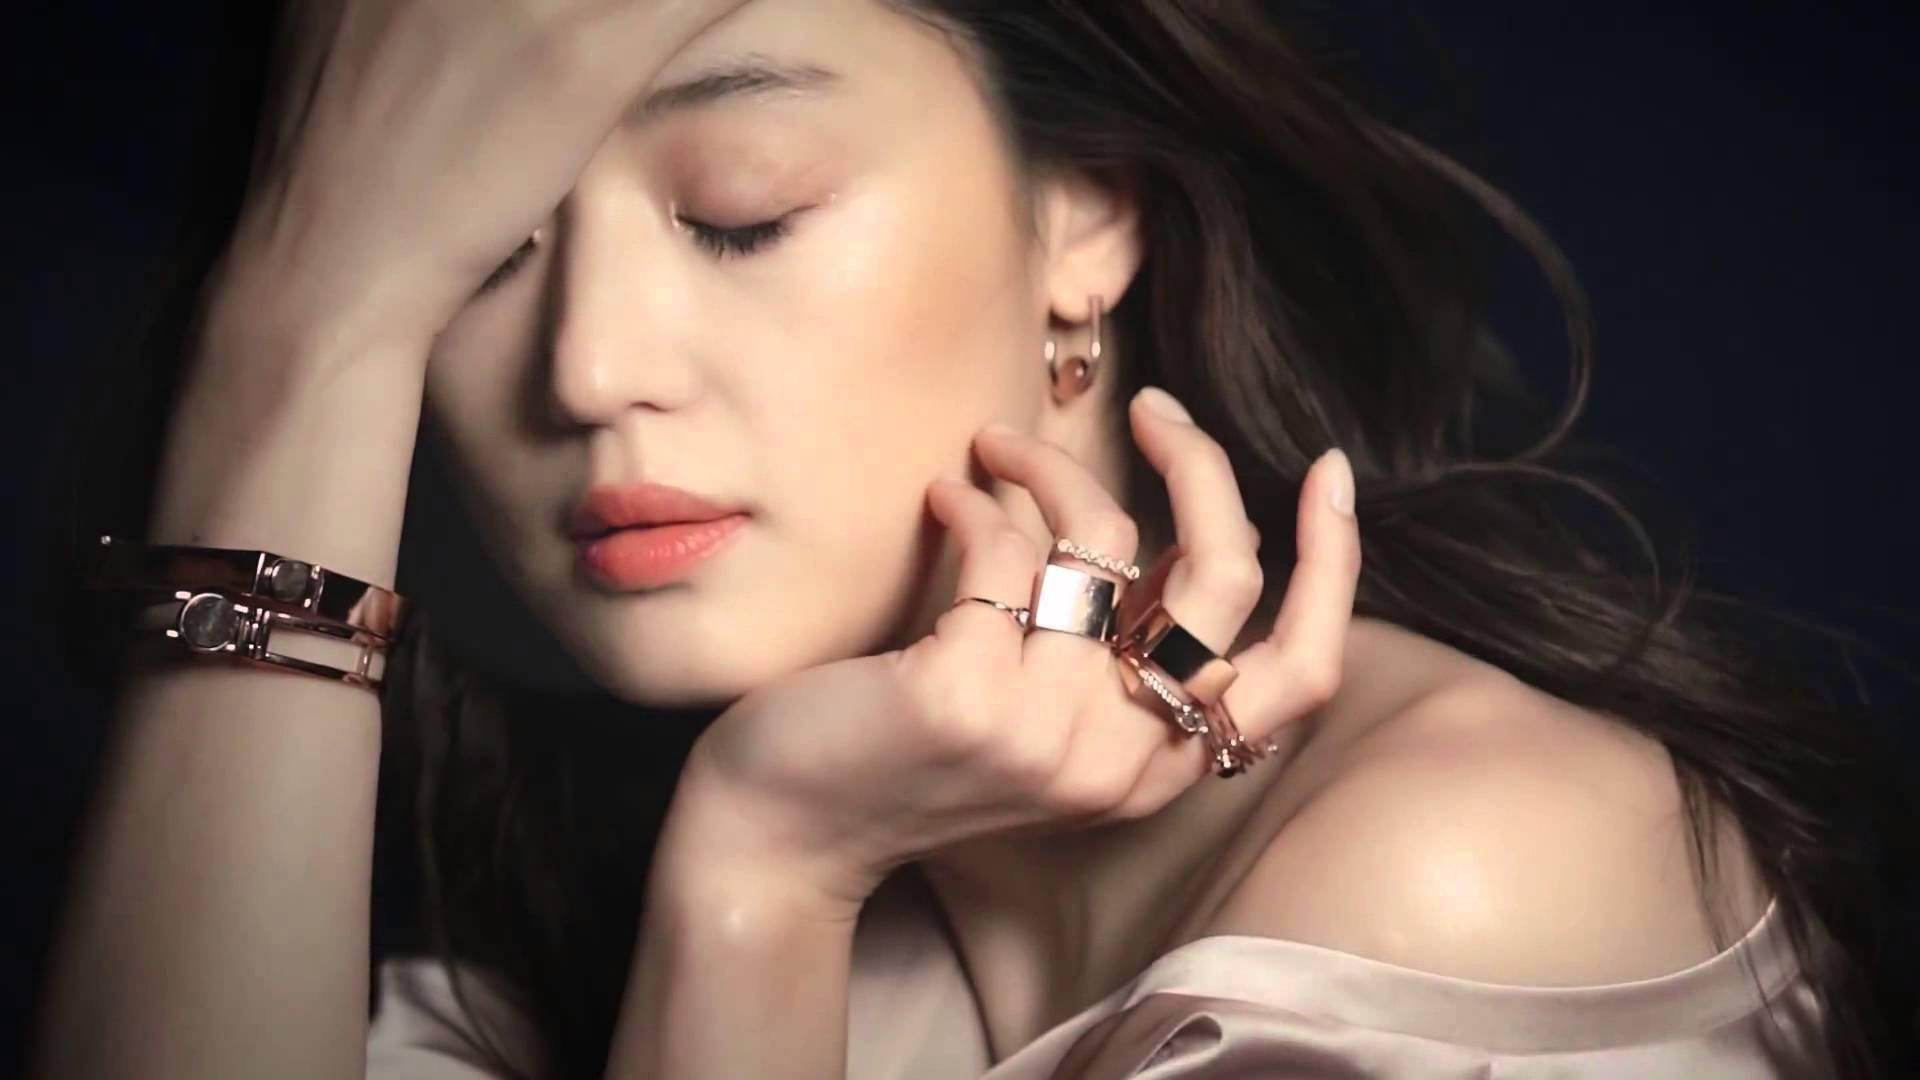 Caption: Elegant Jun Ji Hyun Modeling Glamorous Jewelry Background